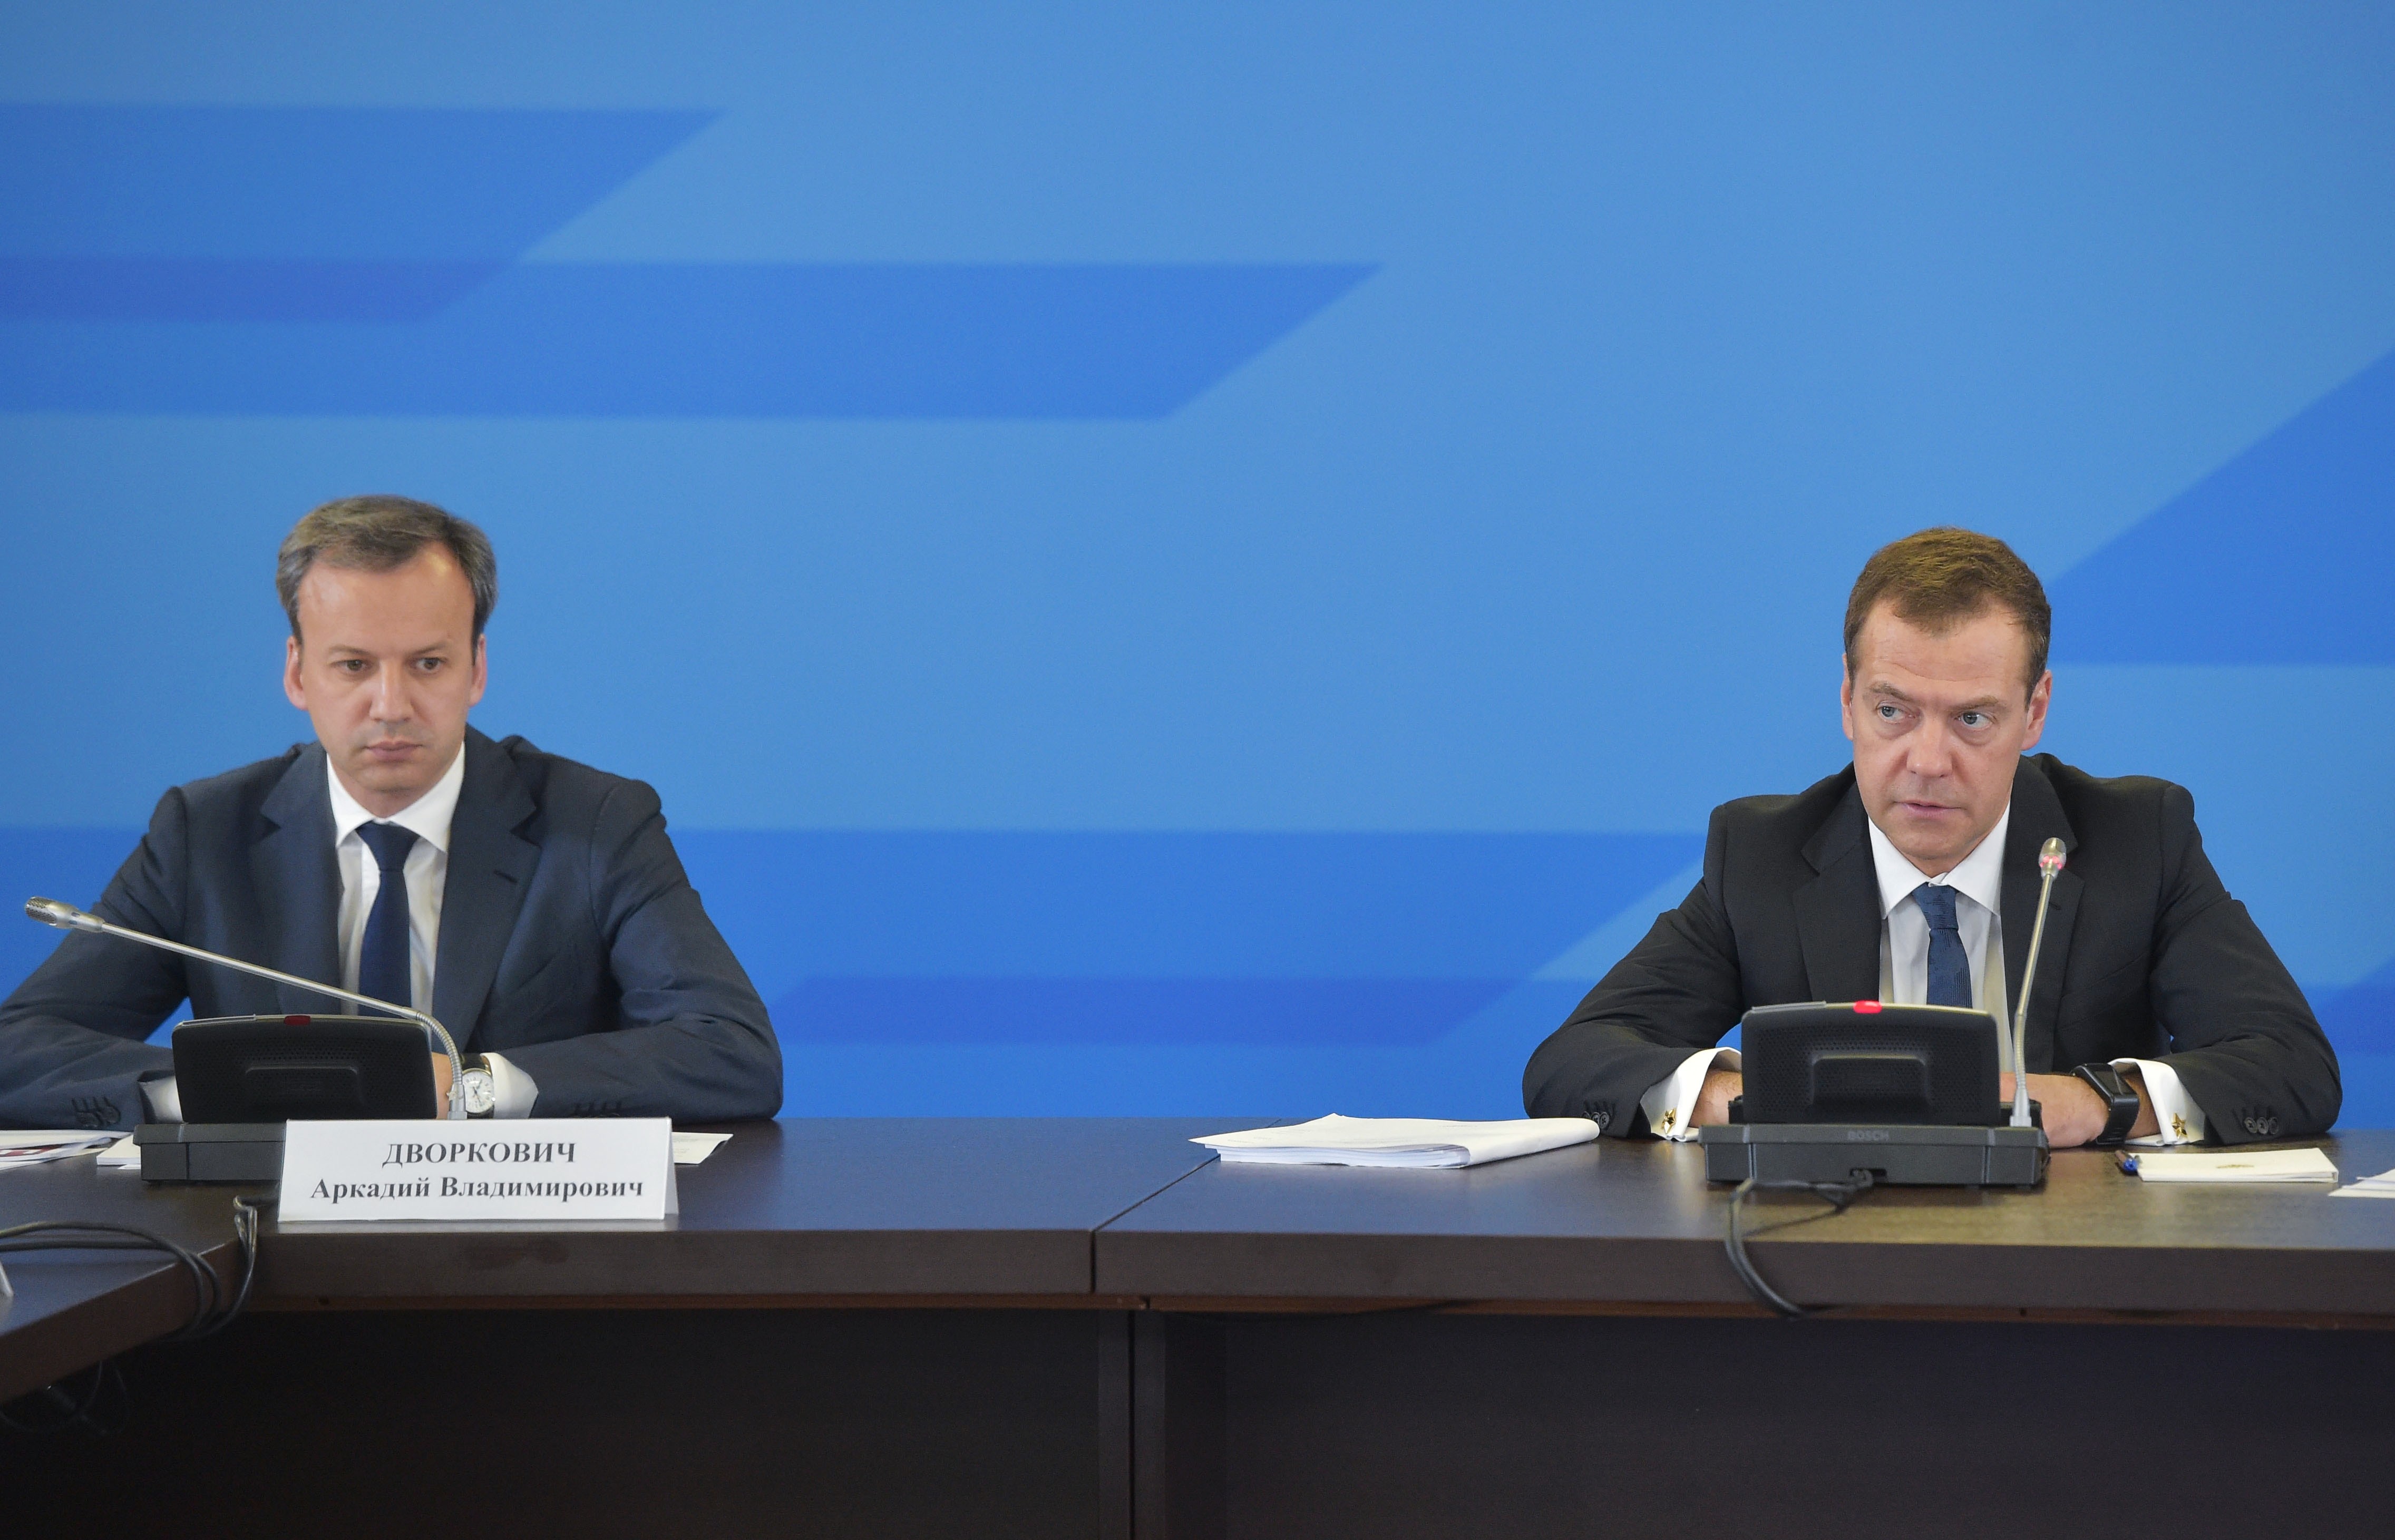 Аркадий Дворкович (слева) и Дмитрий Медведев. Фото: &copy;РИА Новости/Александр Астафьев
&nbsp;